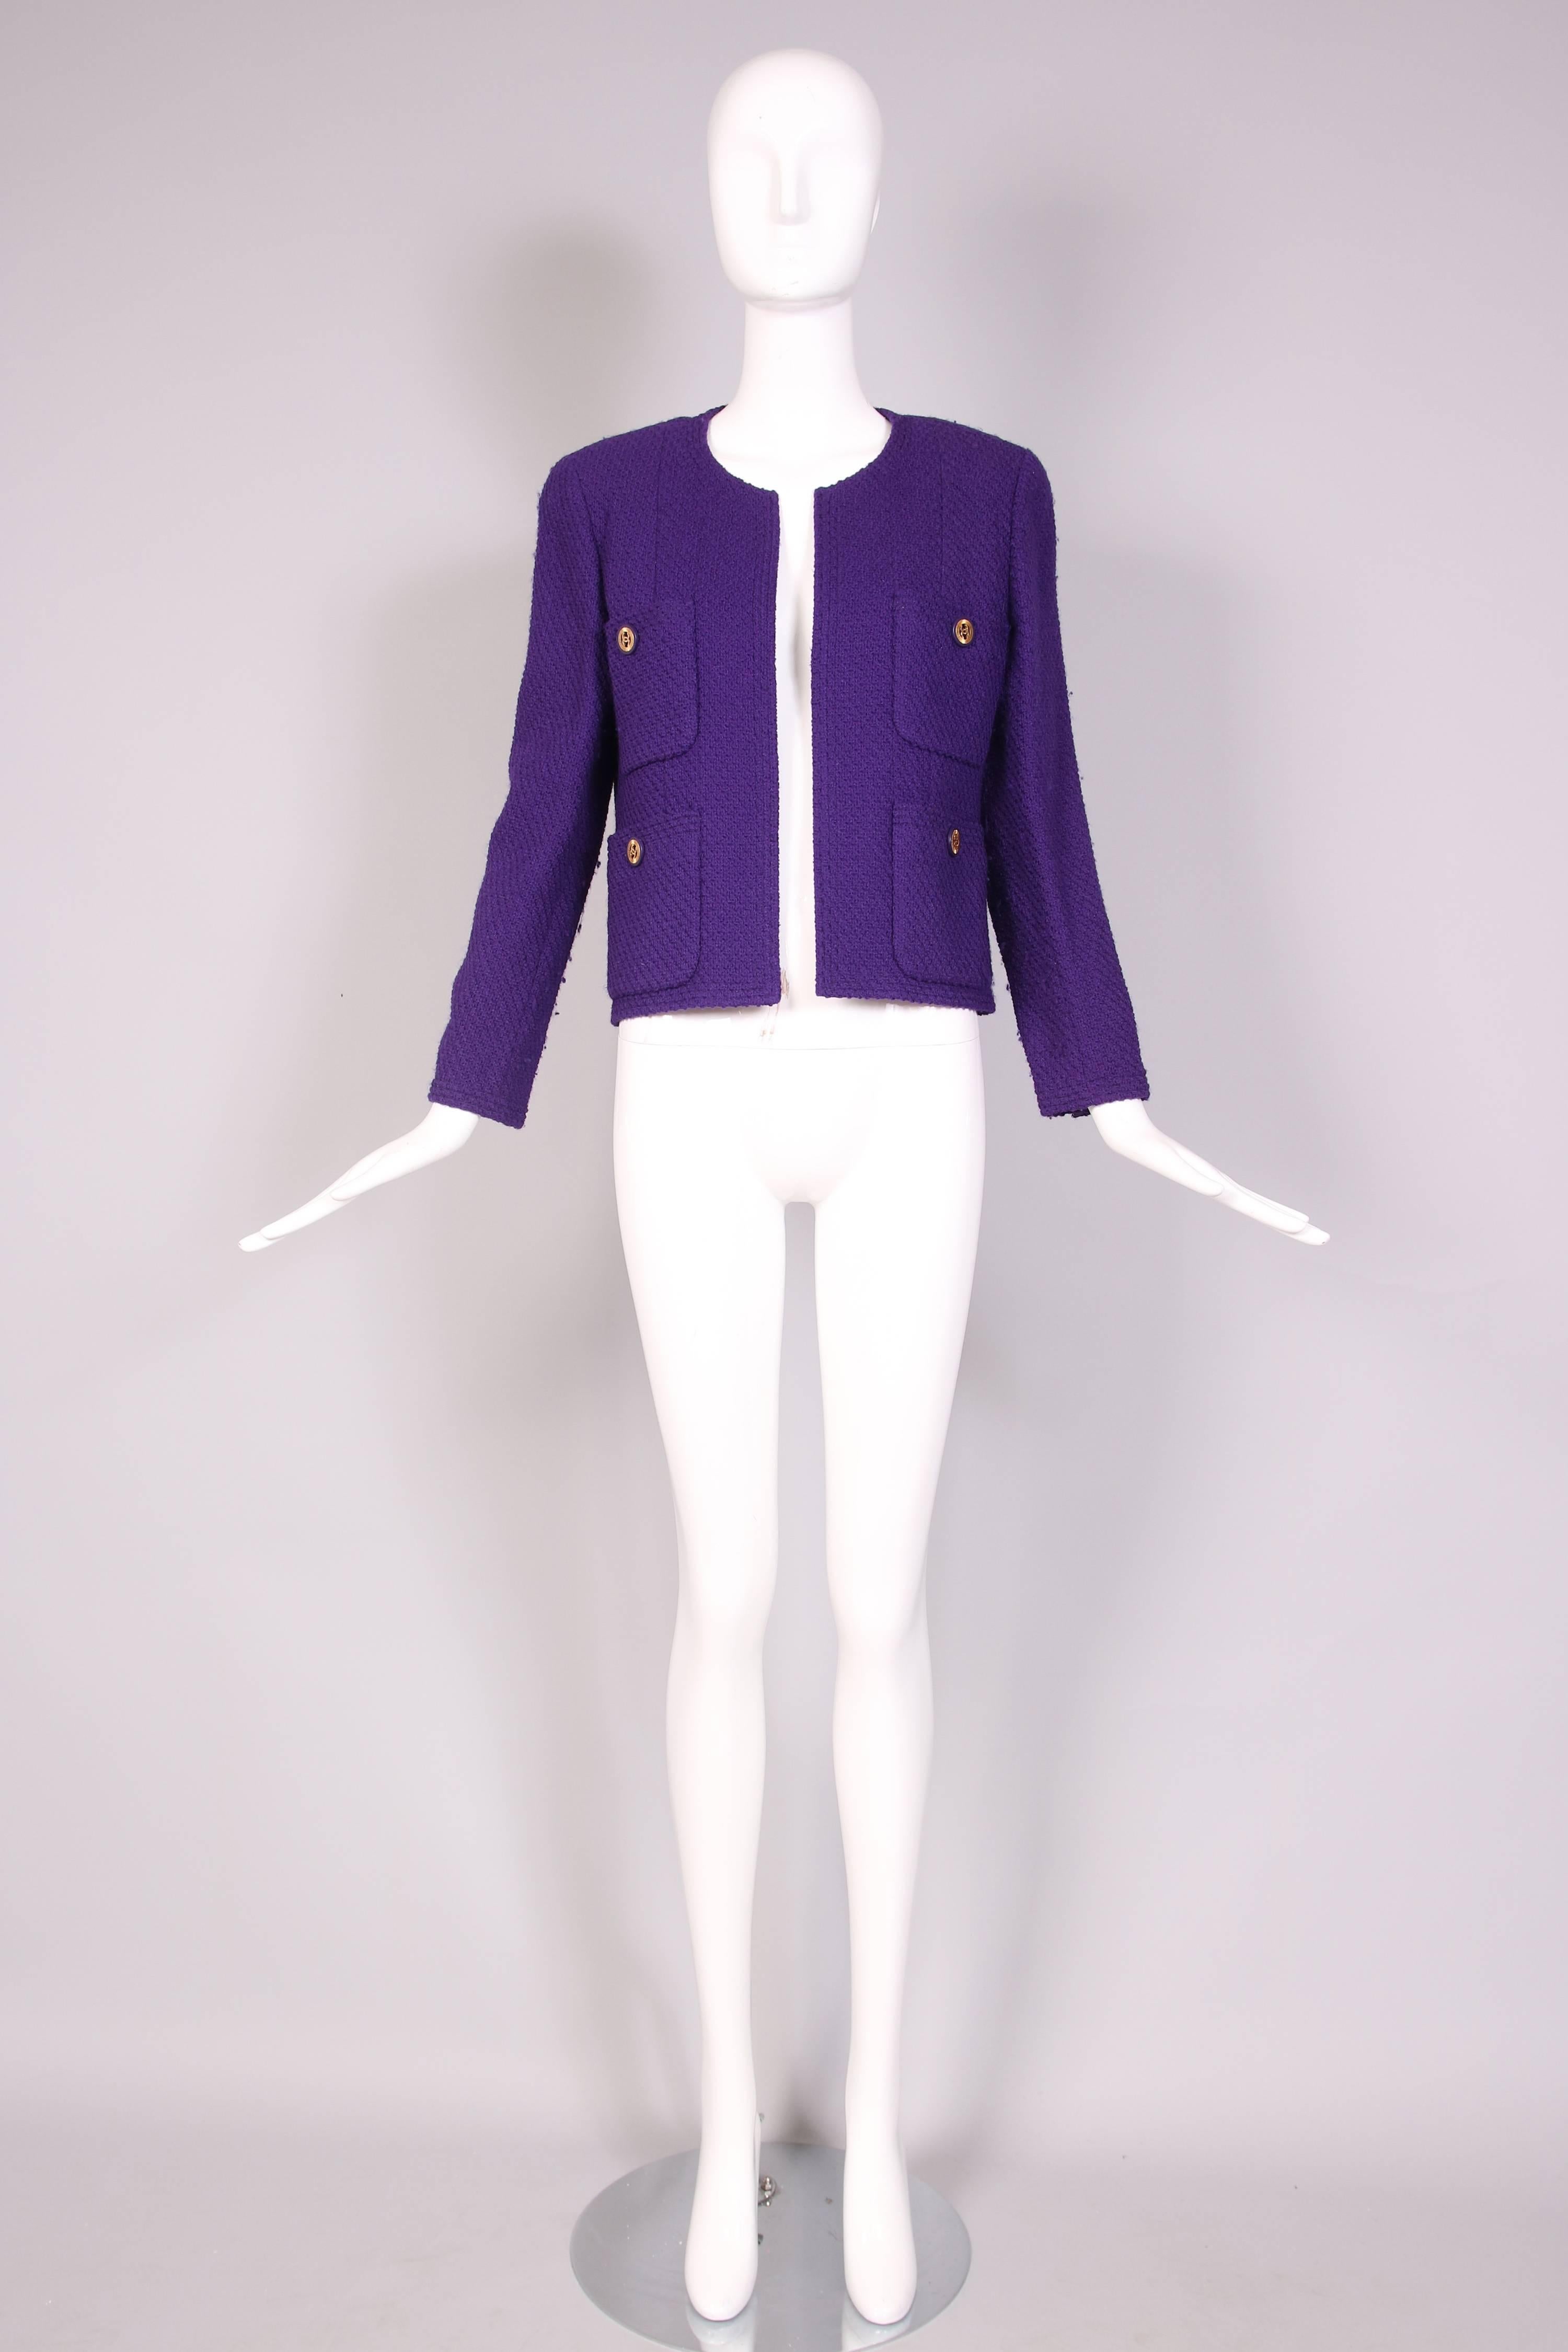 Women's Vintage Chanel Purple Boucle Wool Jacket & Skirt w/Jeweled Clock Print Lining